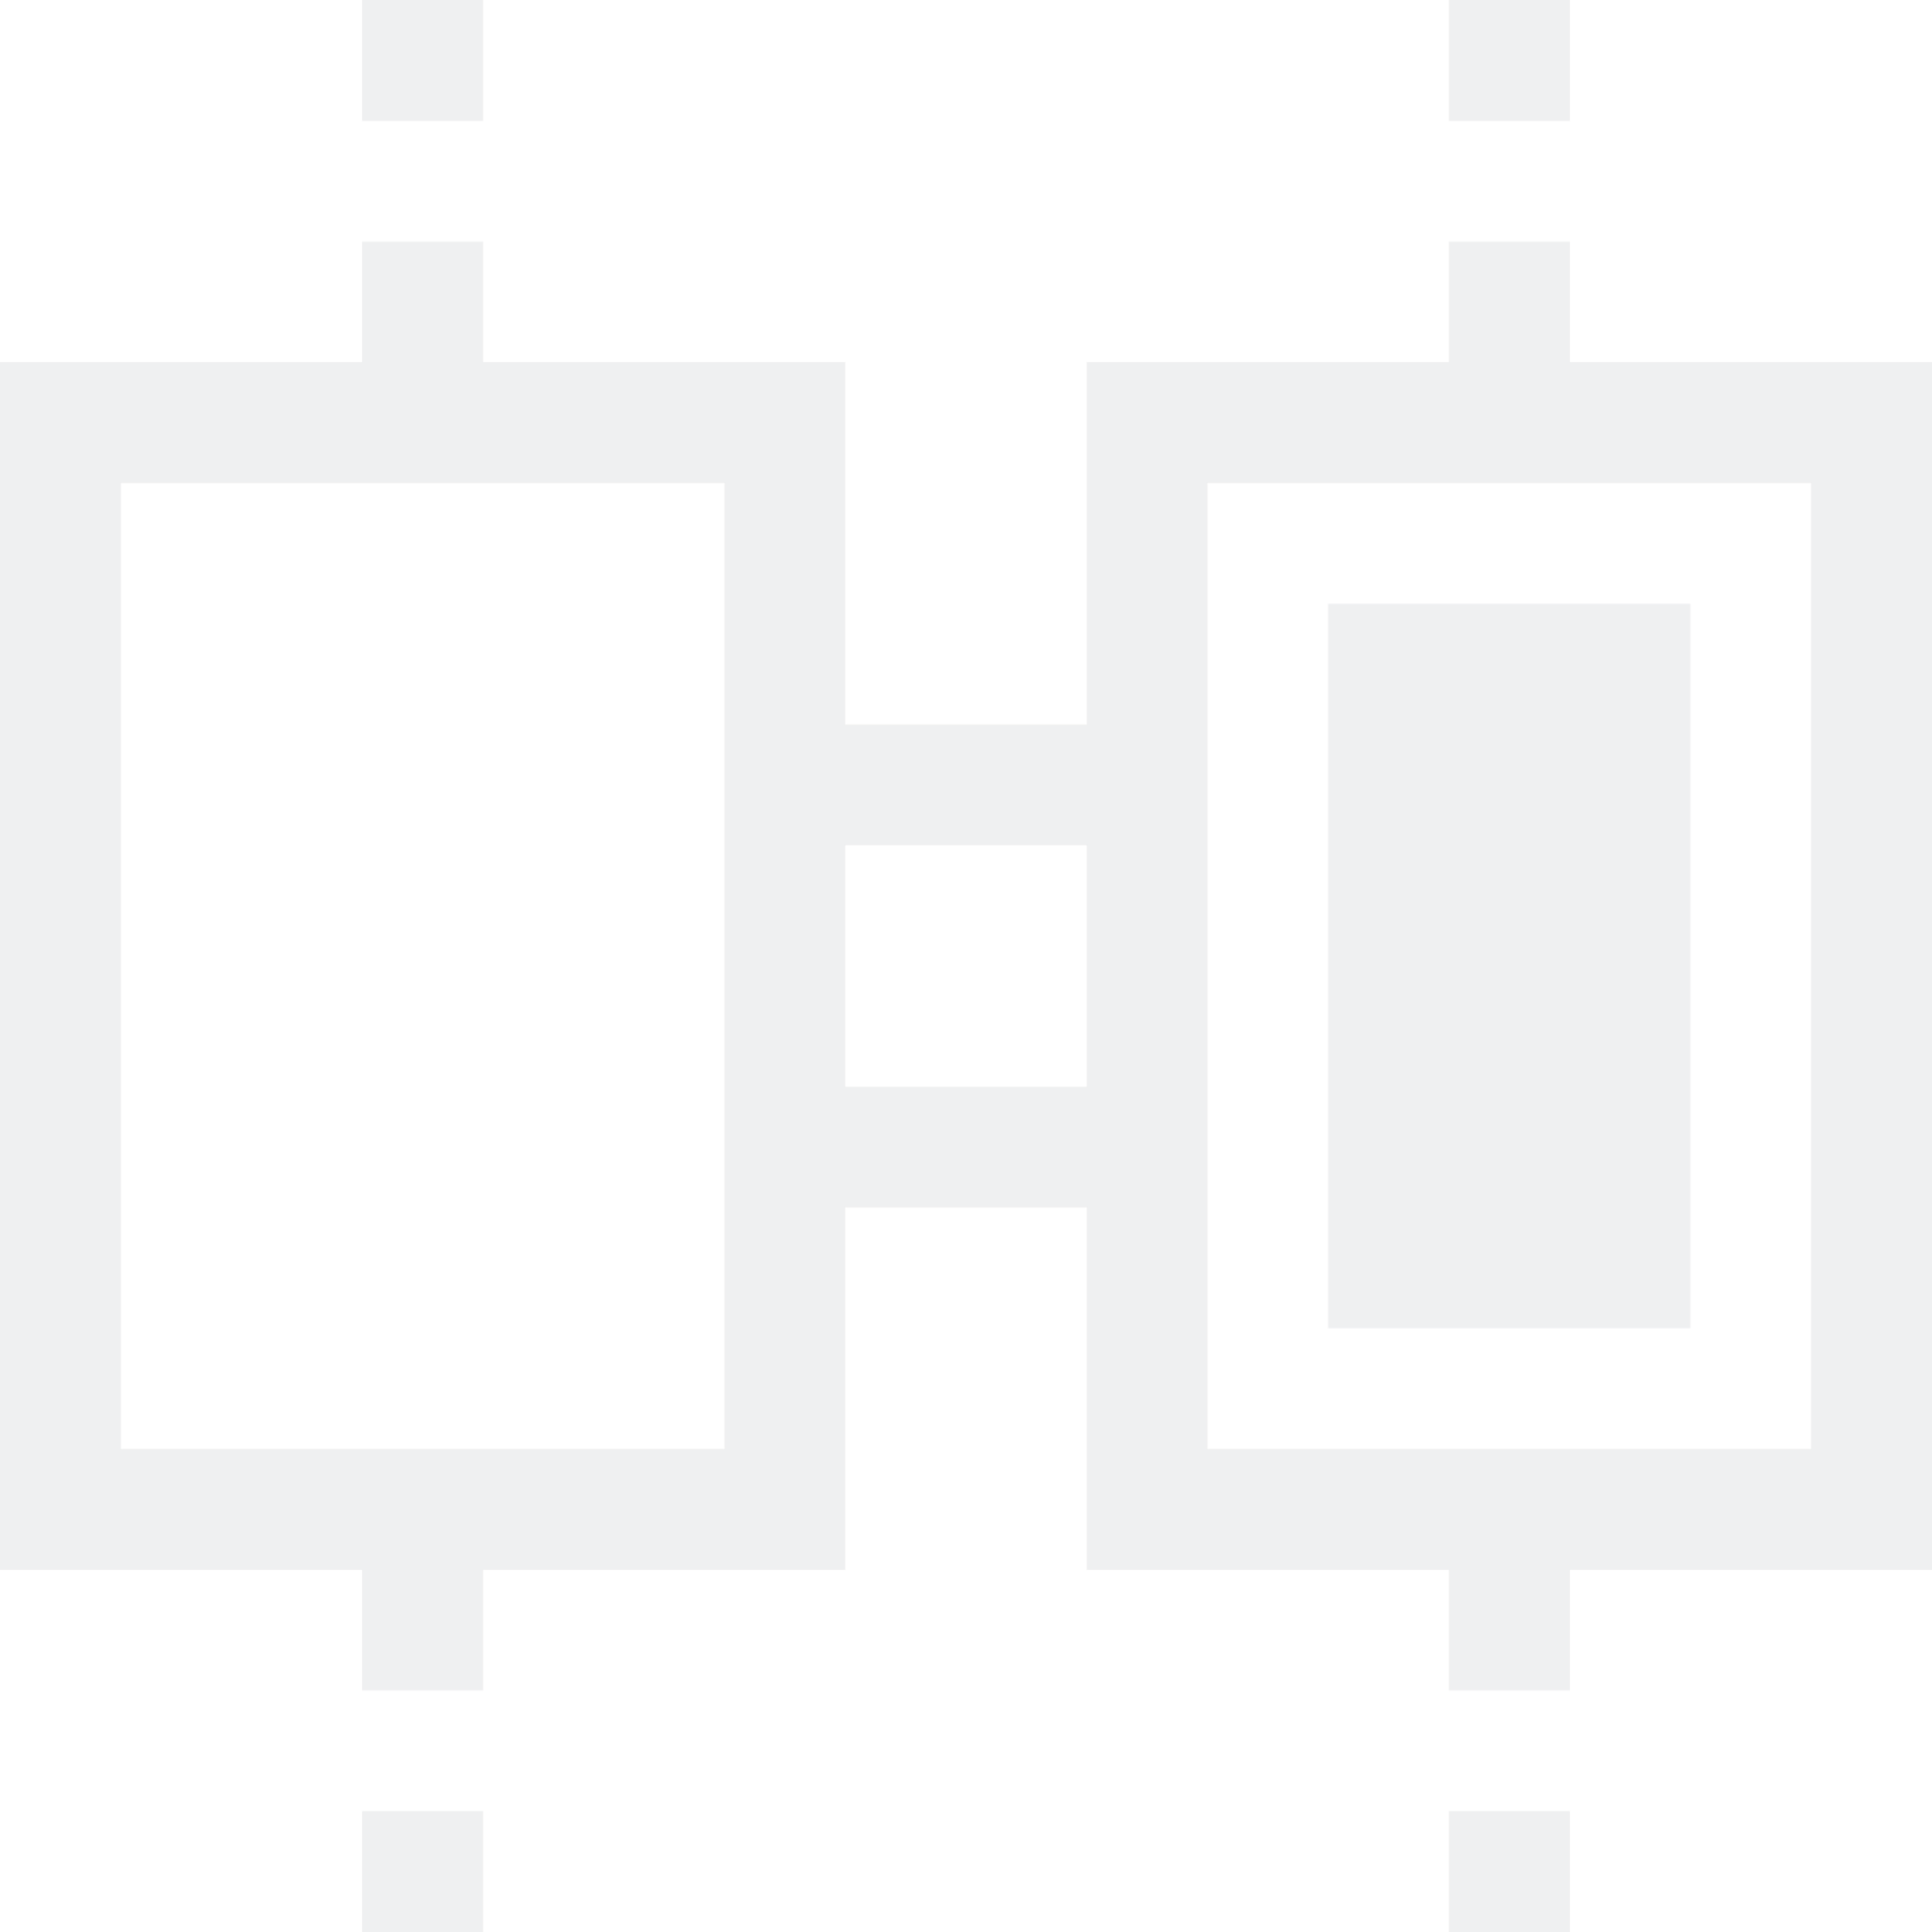 object flip horizontal icon